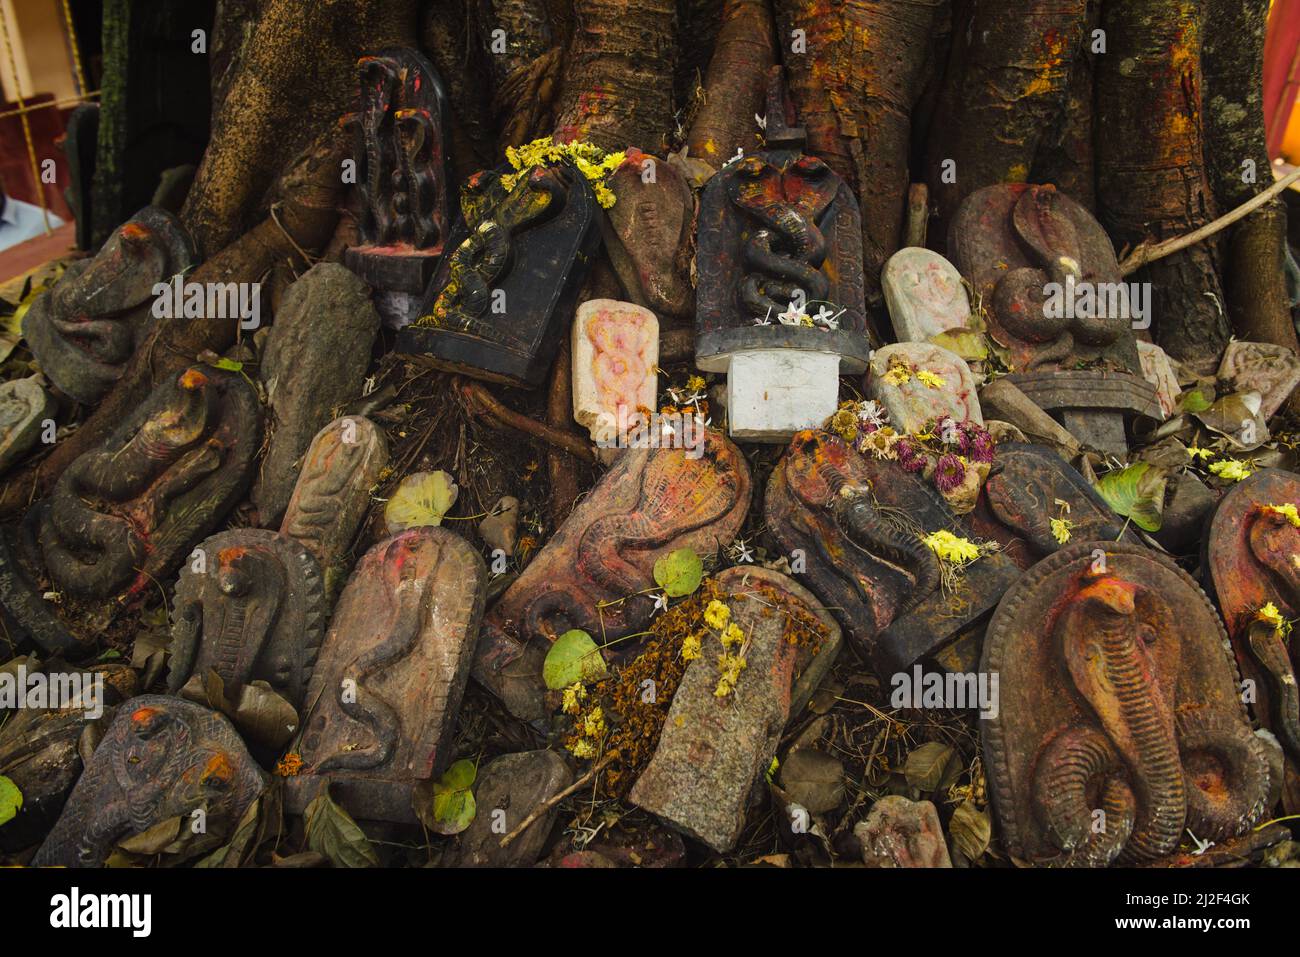 Gokarna, India - February 19, 2016: Holy banyan tree with snakes statuettes near Sri Naageshwara Temple, Karnataka state Stock Photo